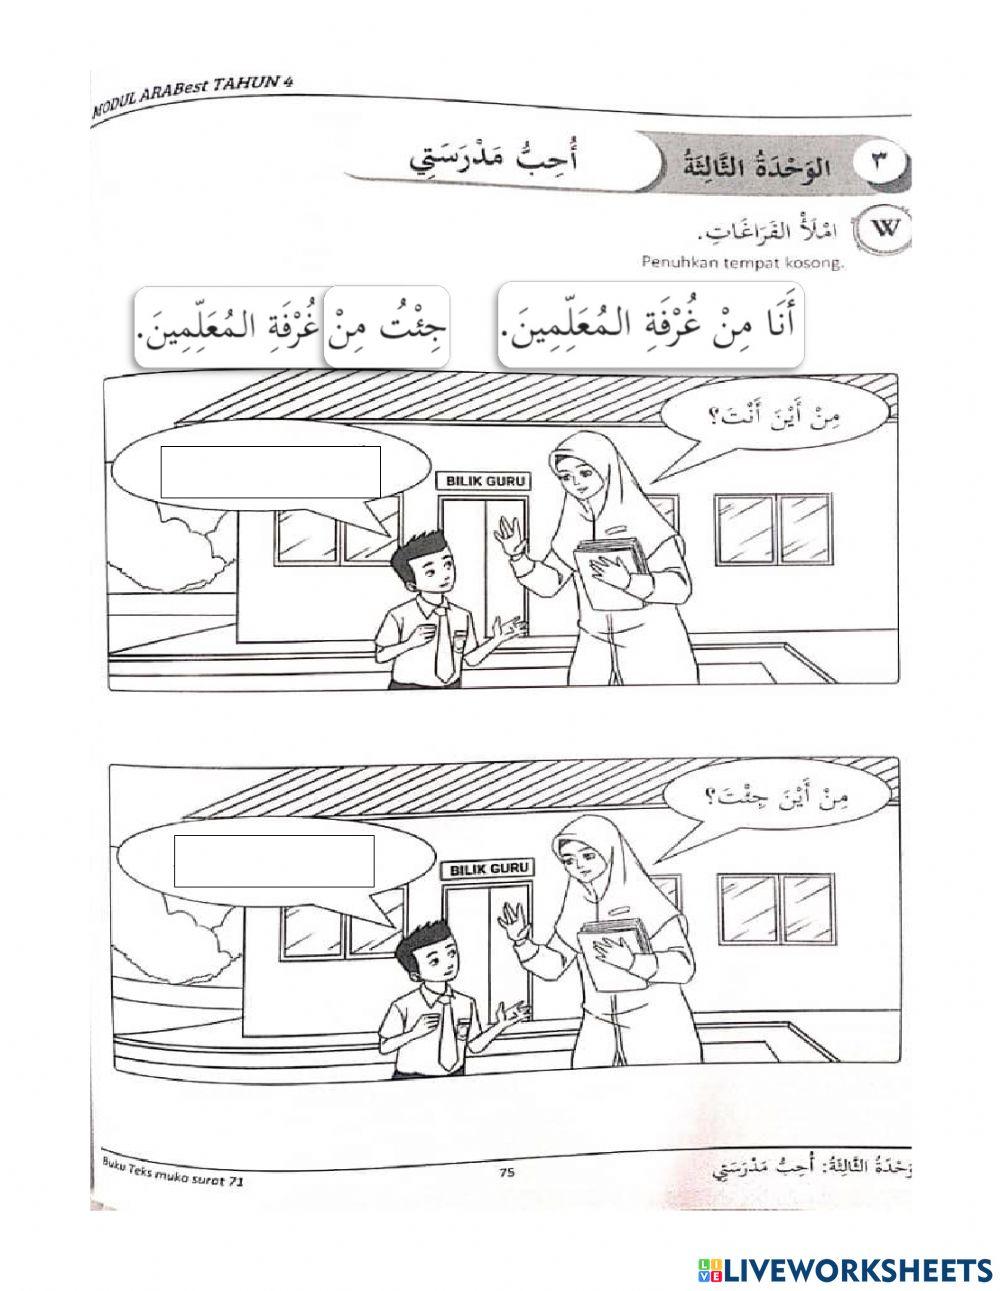 Latihan Bahasa Arab Tahun 4 (jumlah basitoh)